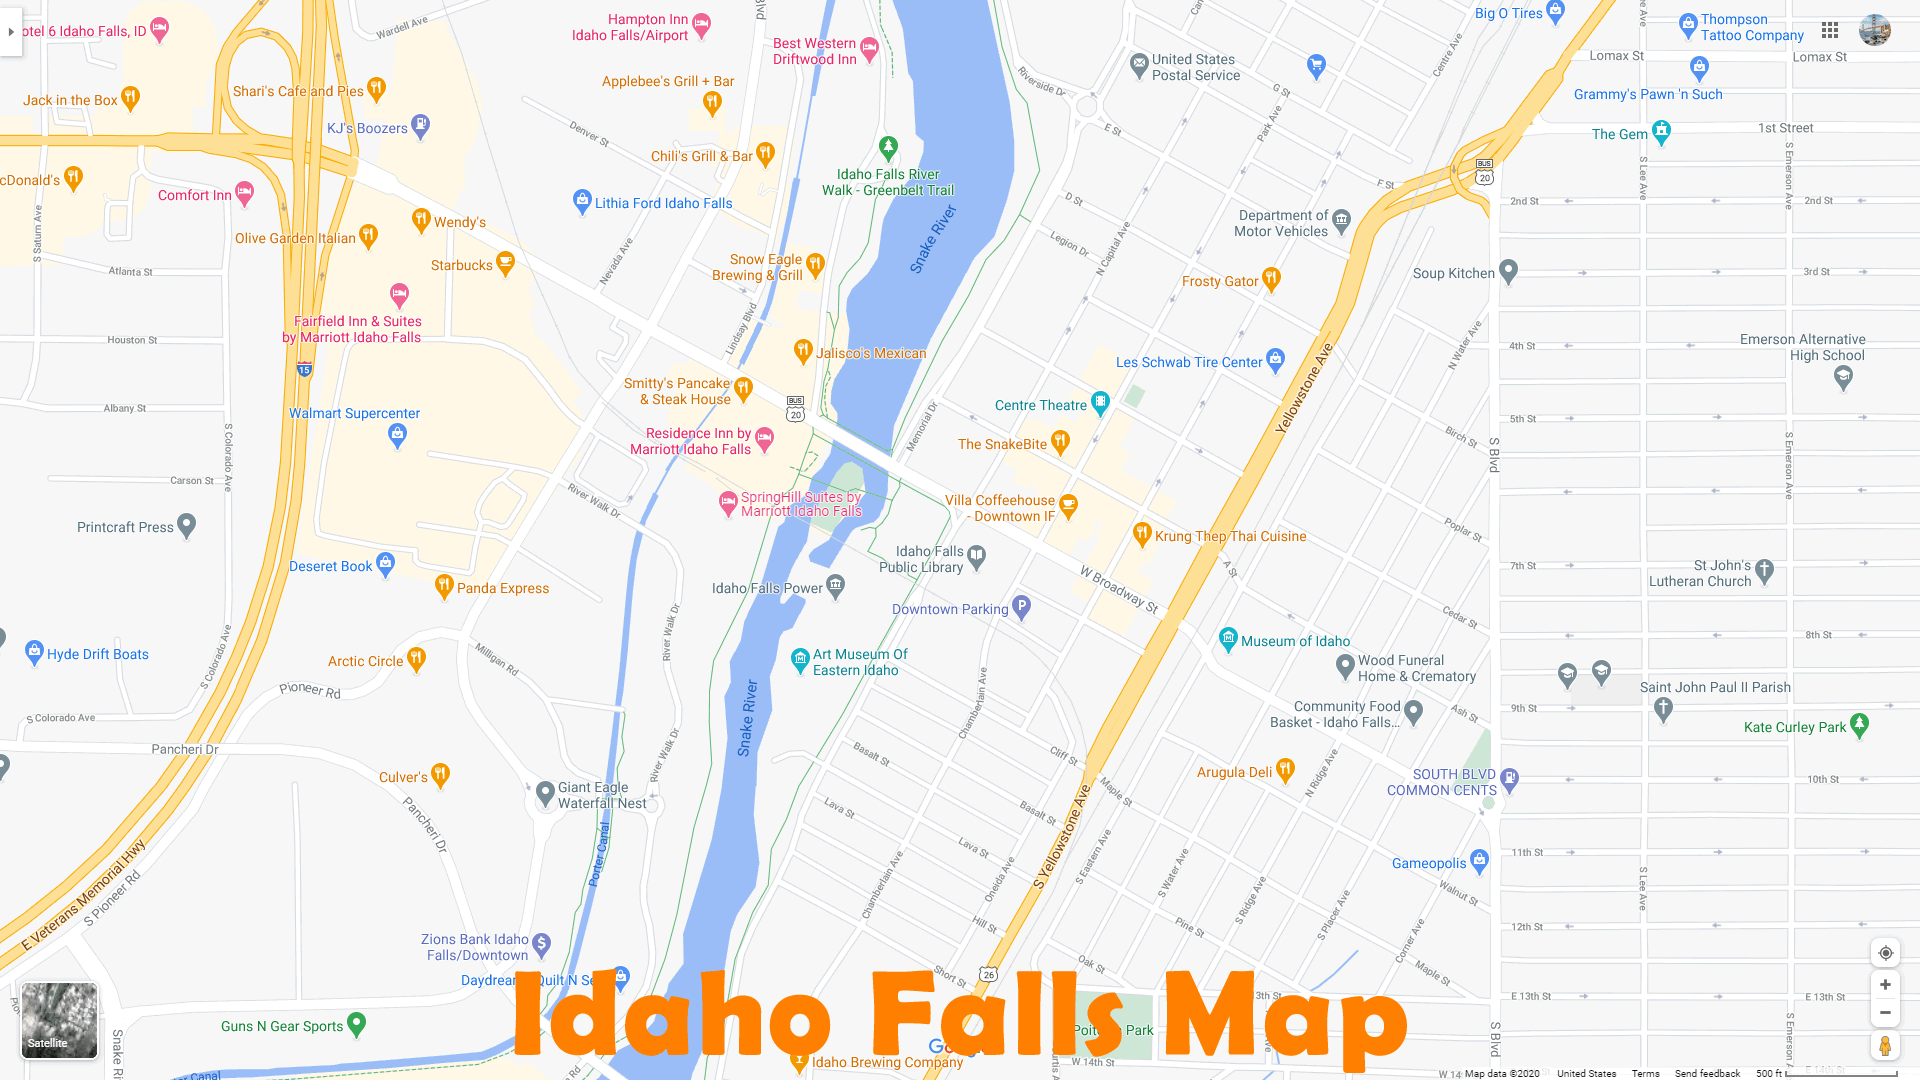 Idaho Falls plan